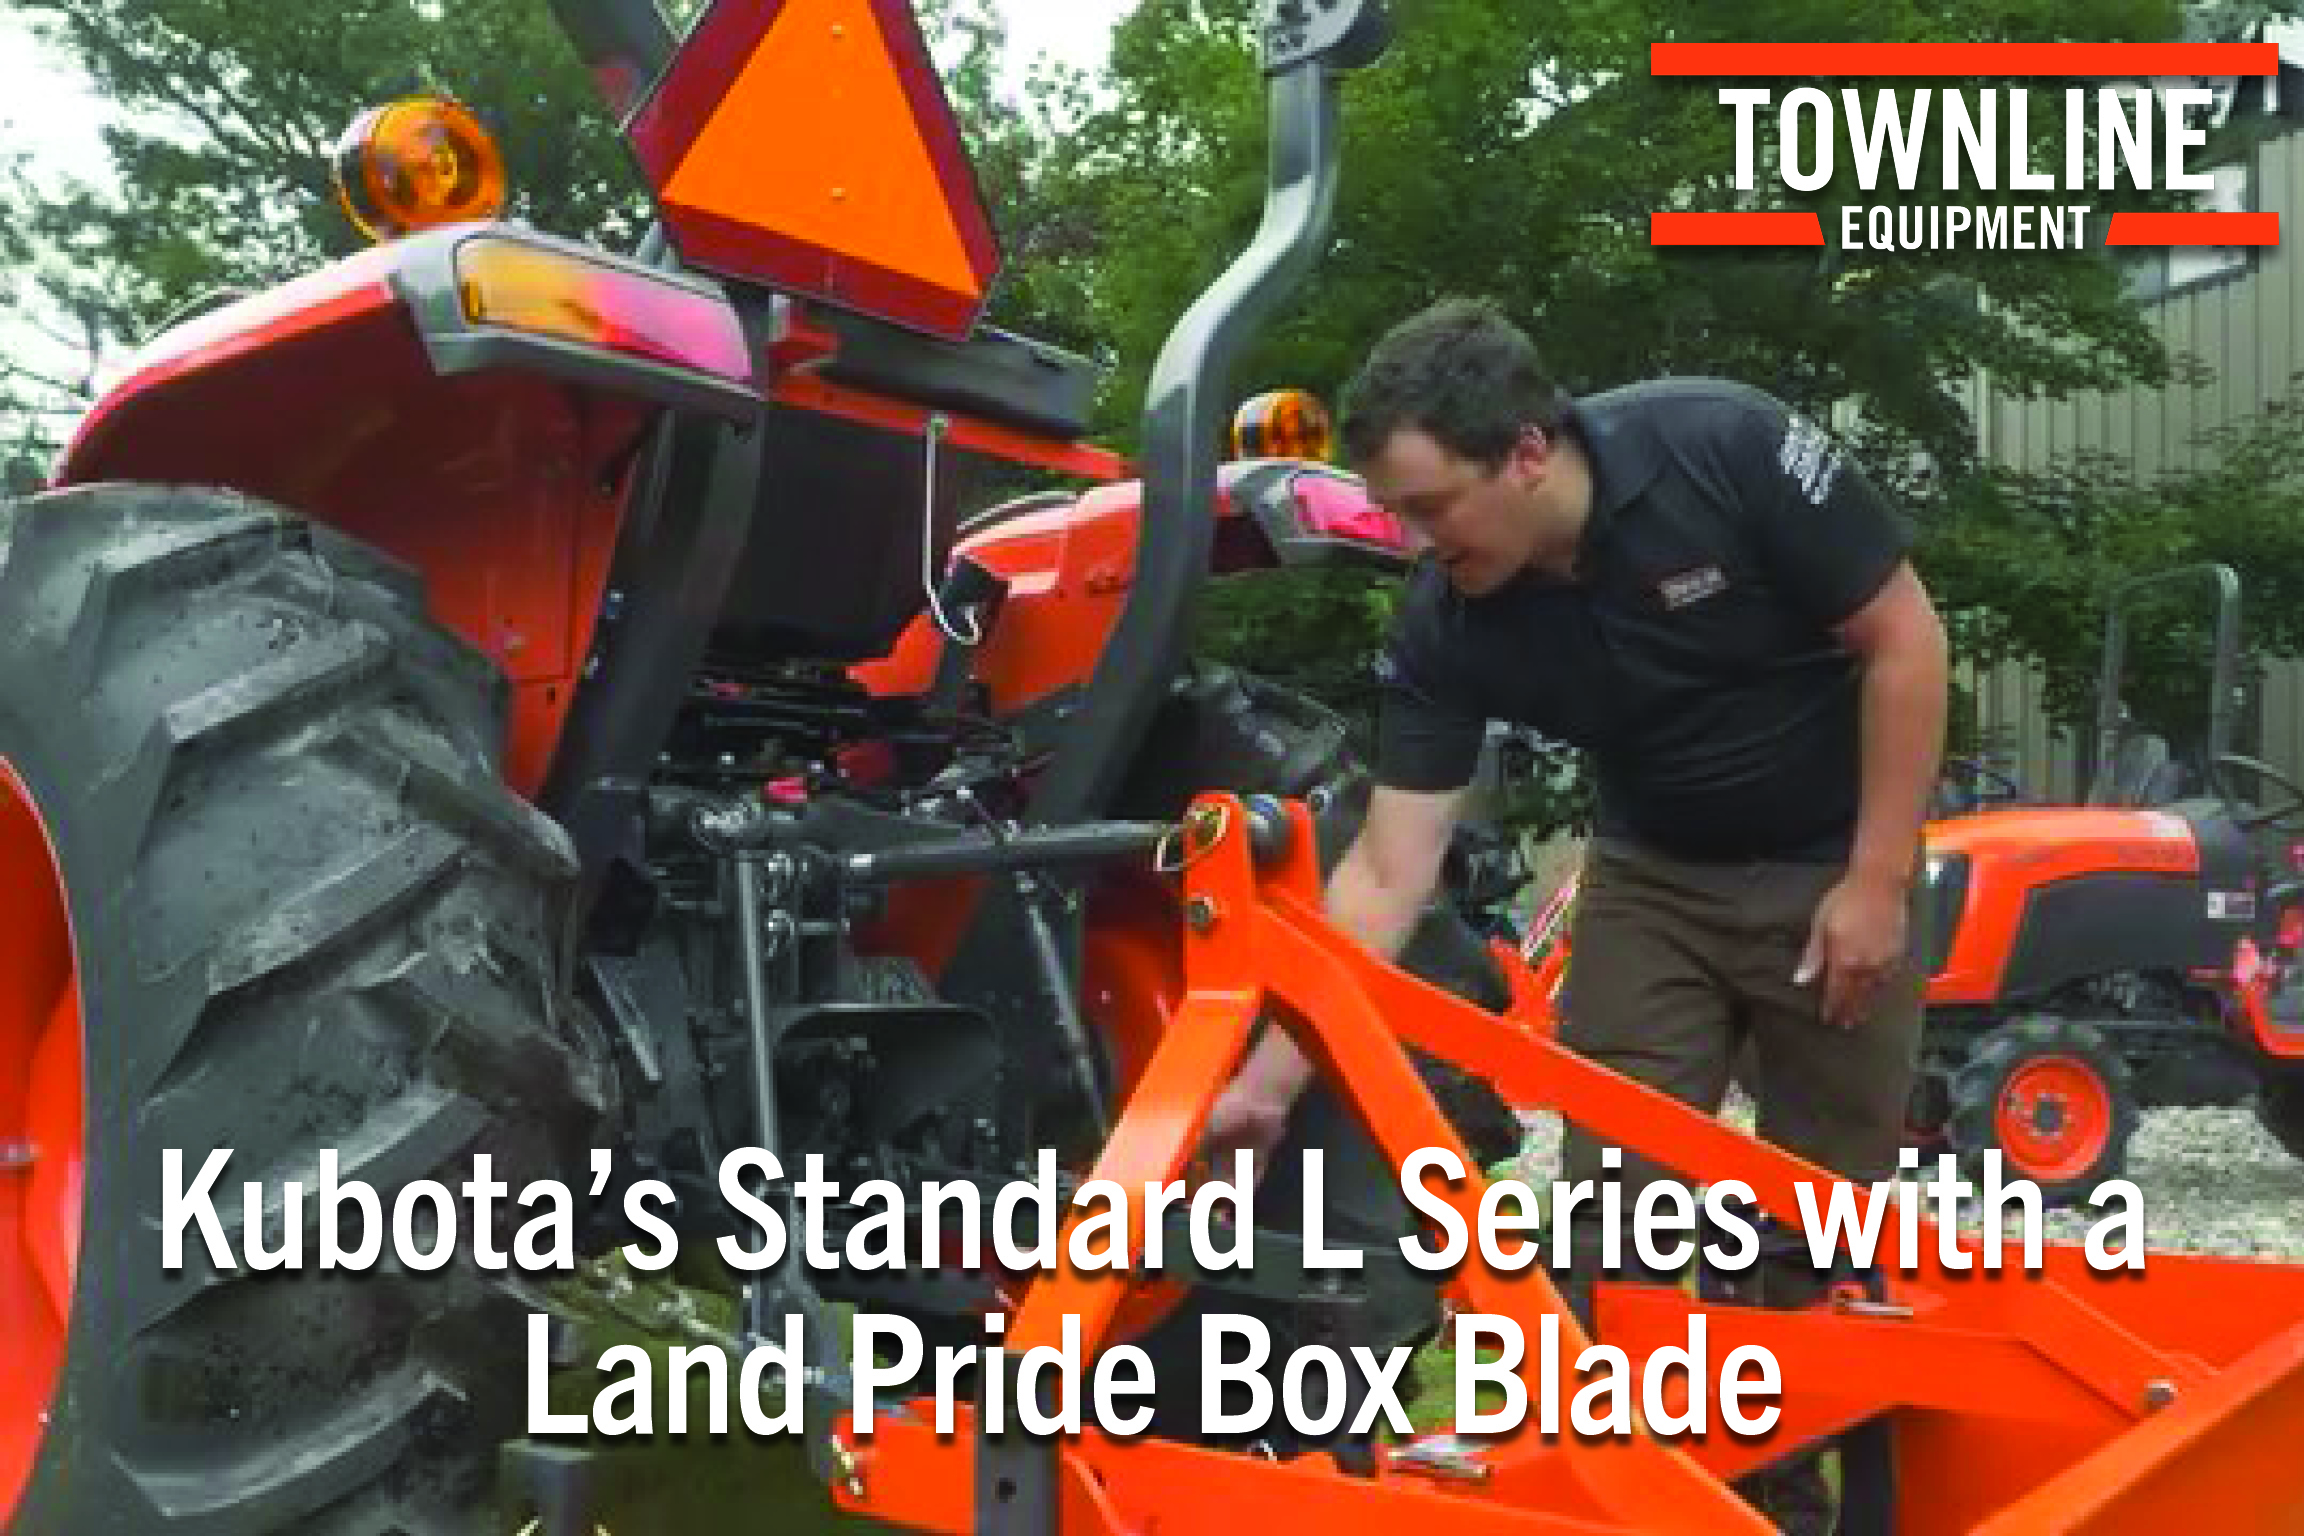 Kubota's Standard L Series with a LandPride Box Blade